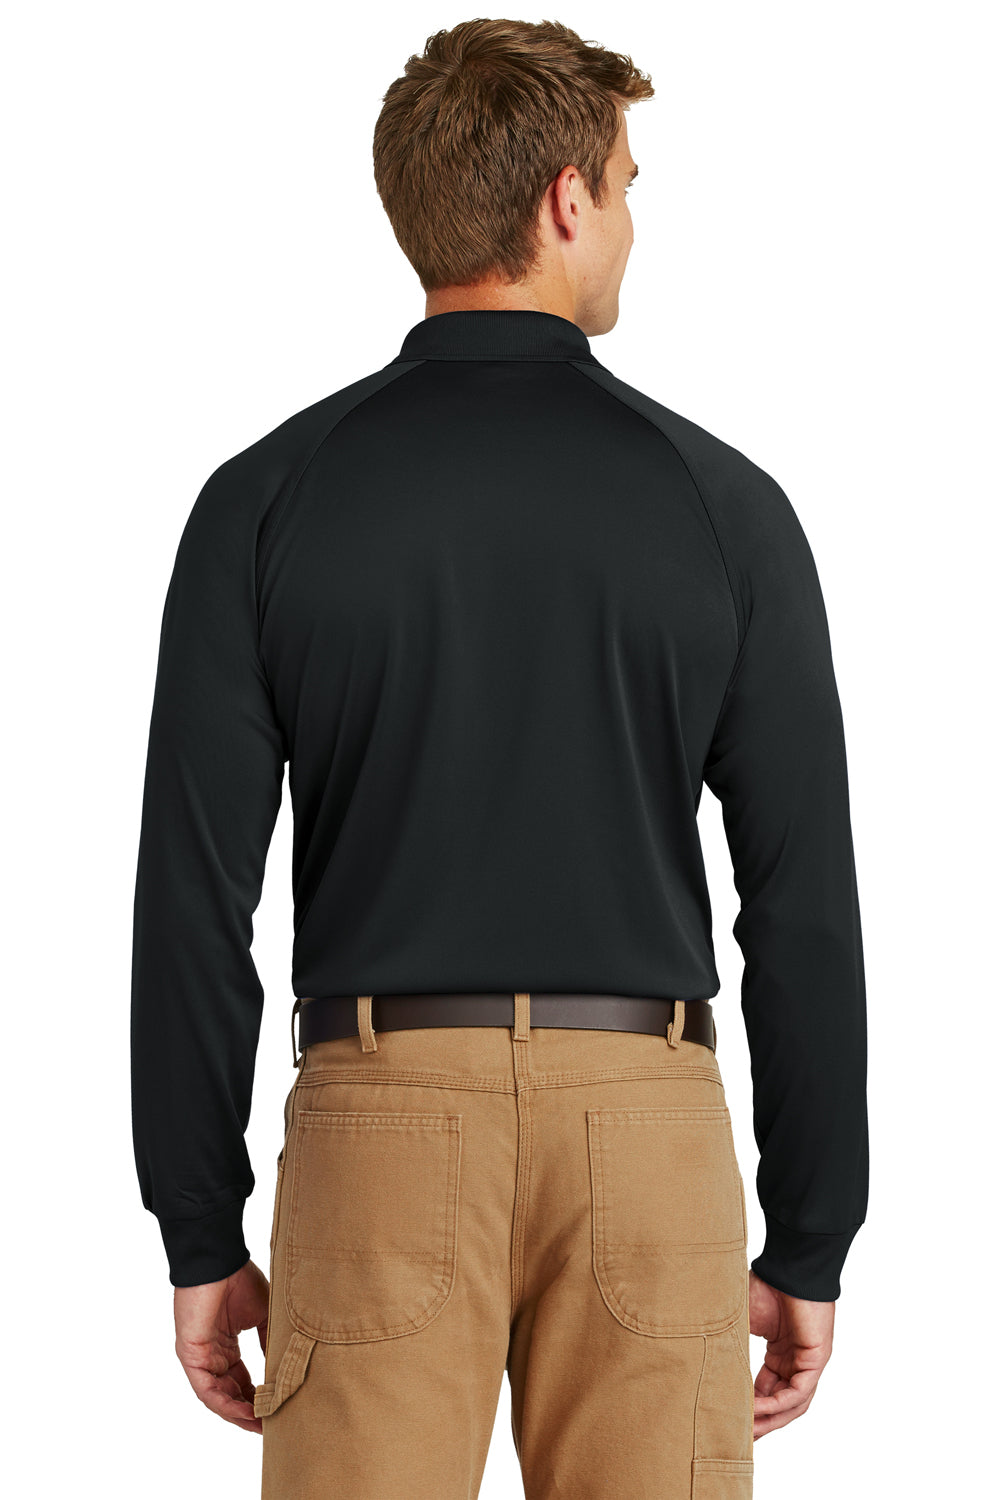 CornerStone CS410LS Mens Select Tactical Moisture Wicking Long Sleeve Polo Shirt Black Back